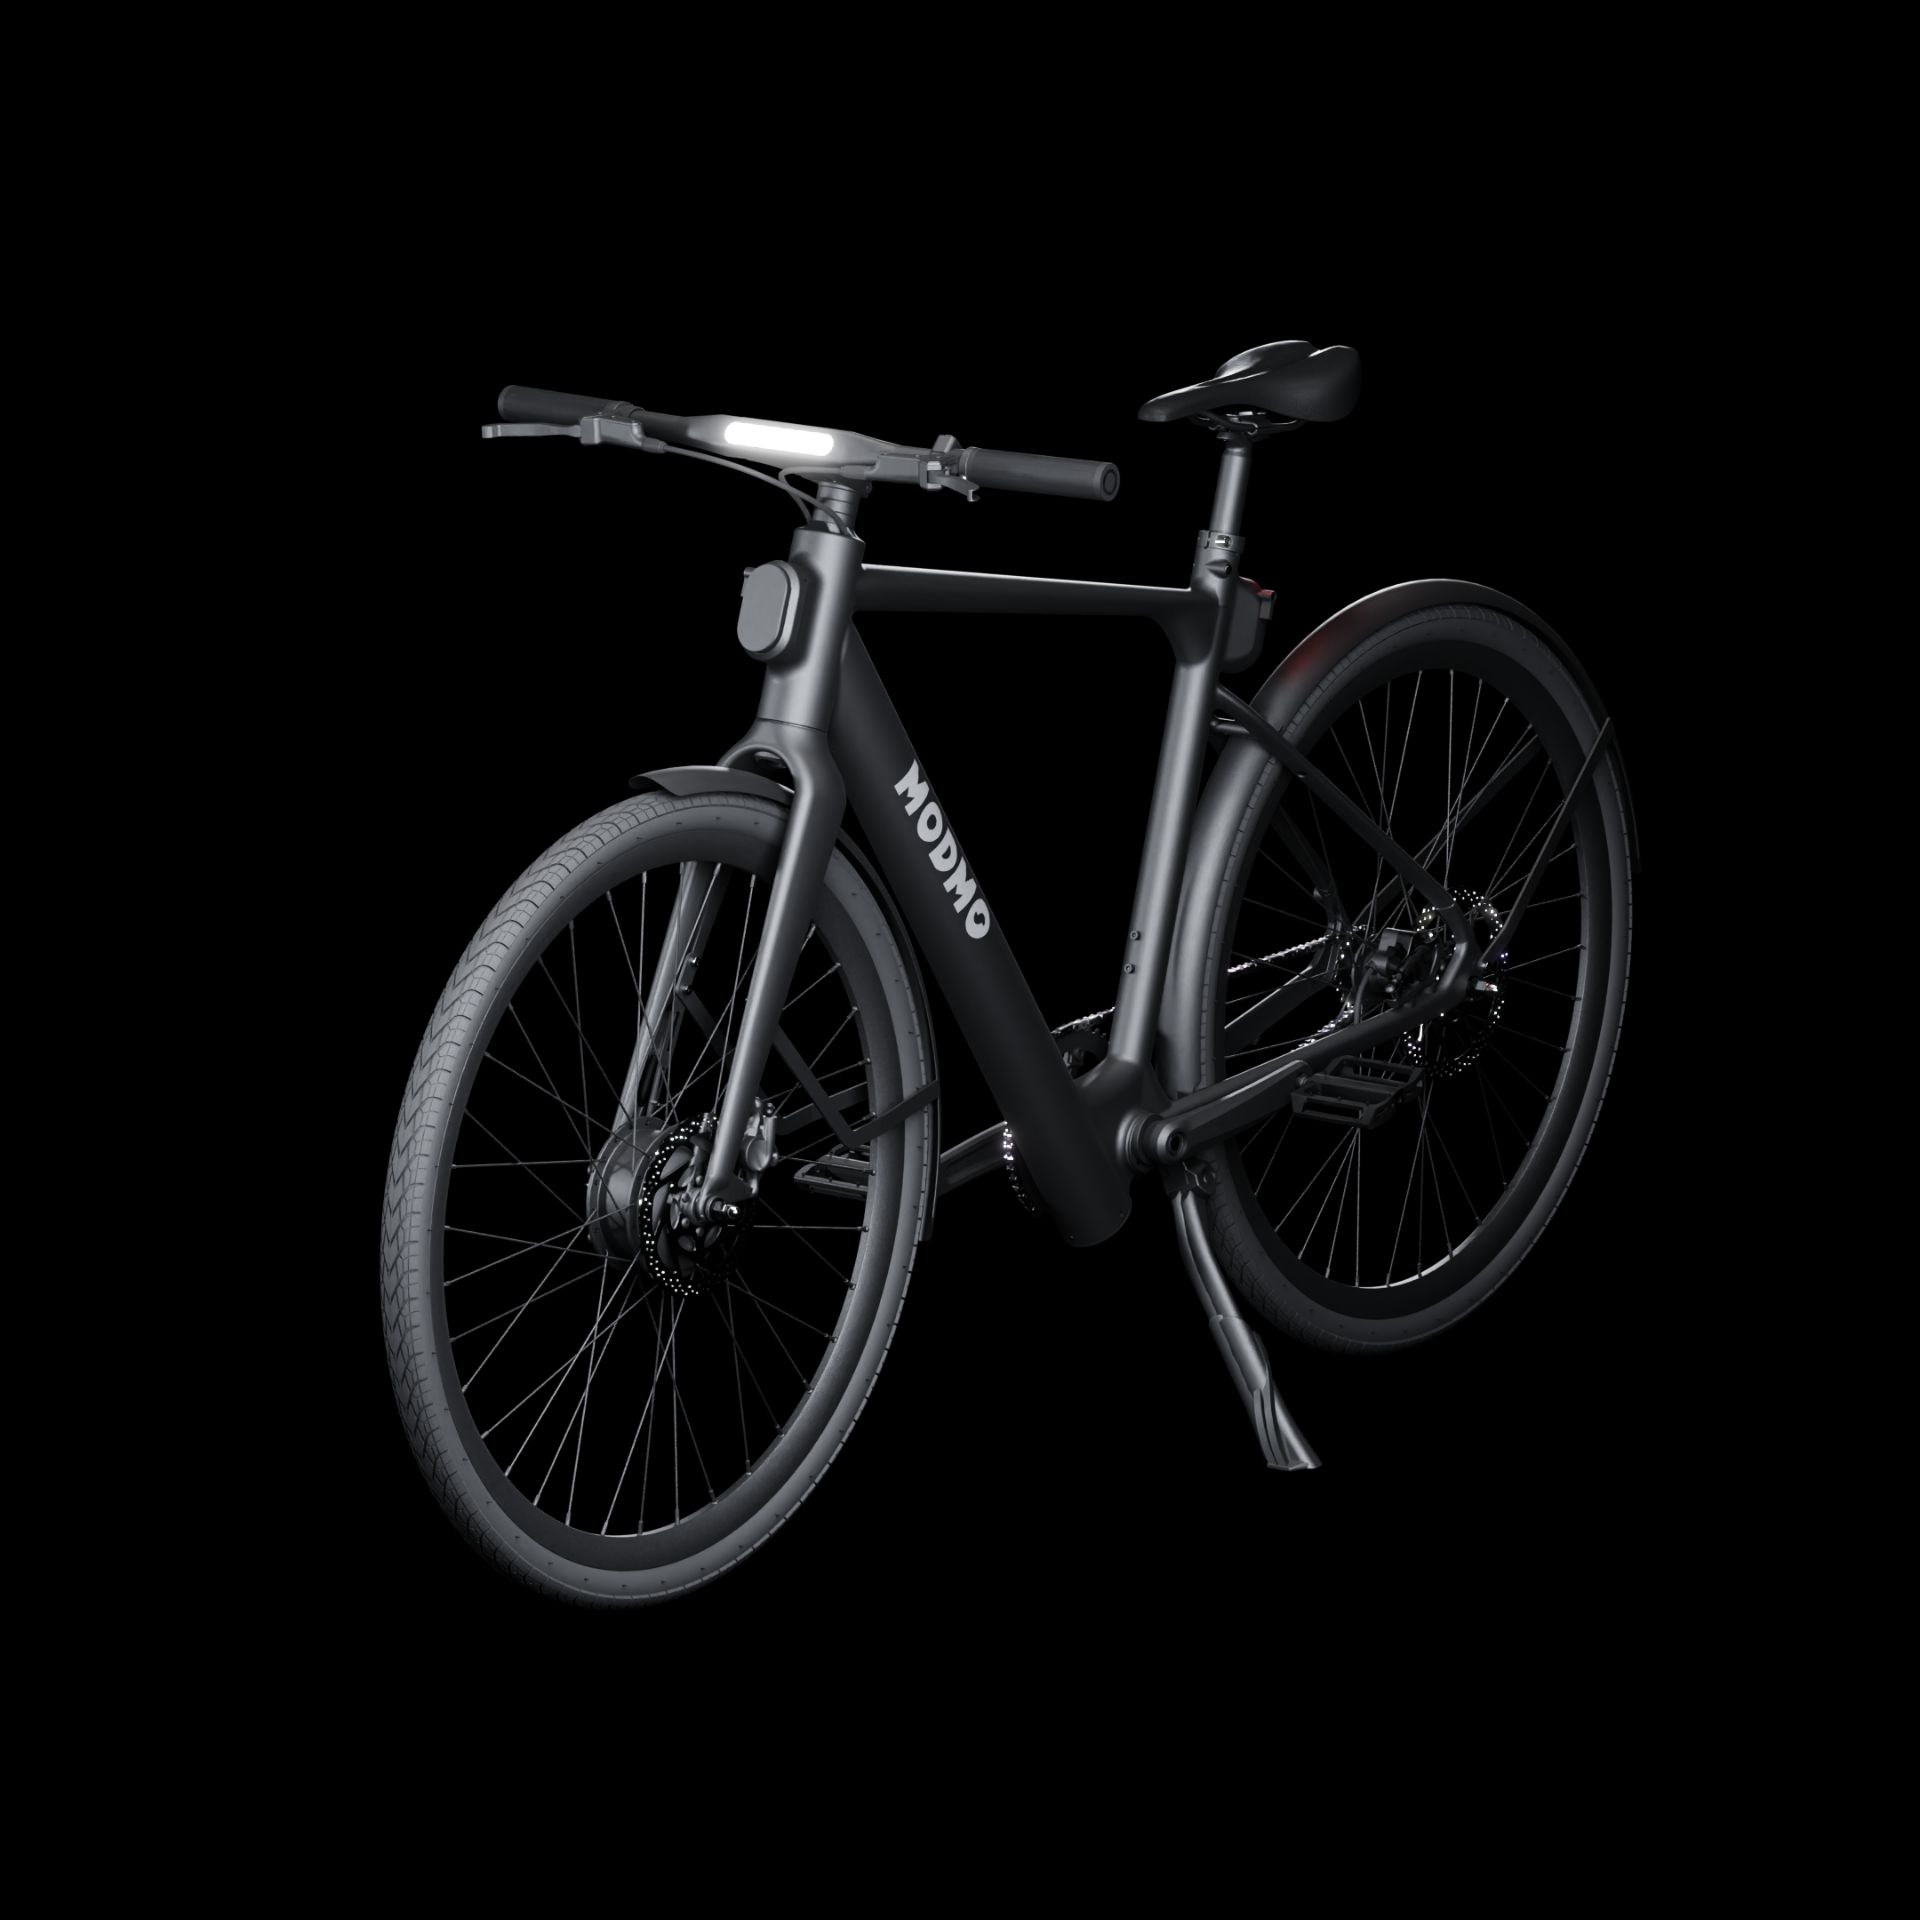 Modmo Saigon+ Electric Bicycle - RRP £2800 - Size M (Rider: 155-175cm) - Image 4 of 19